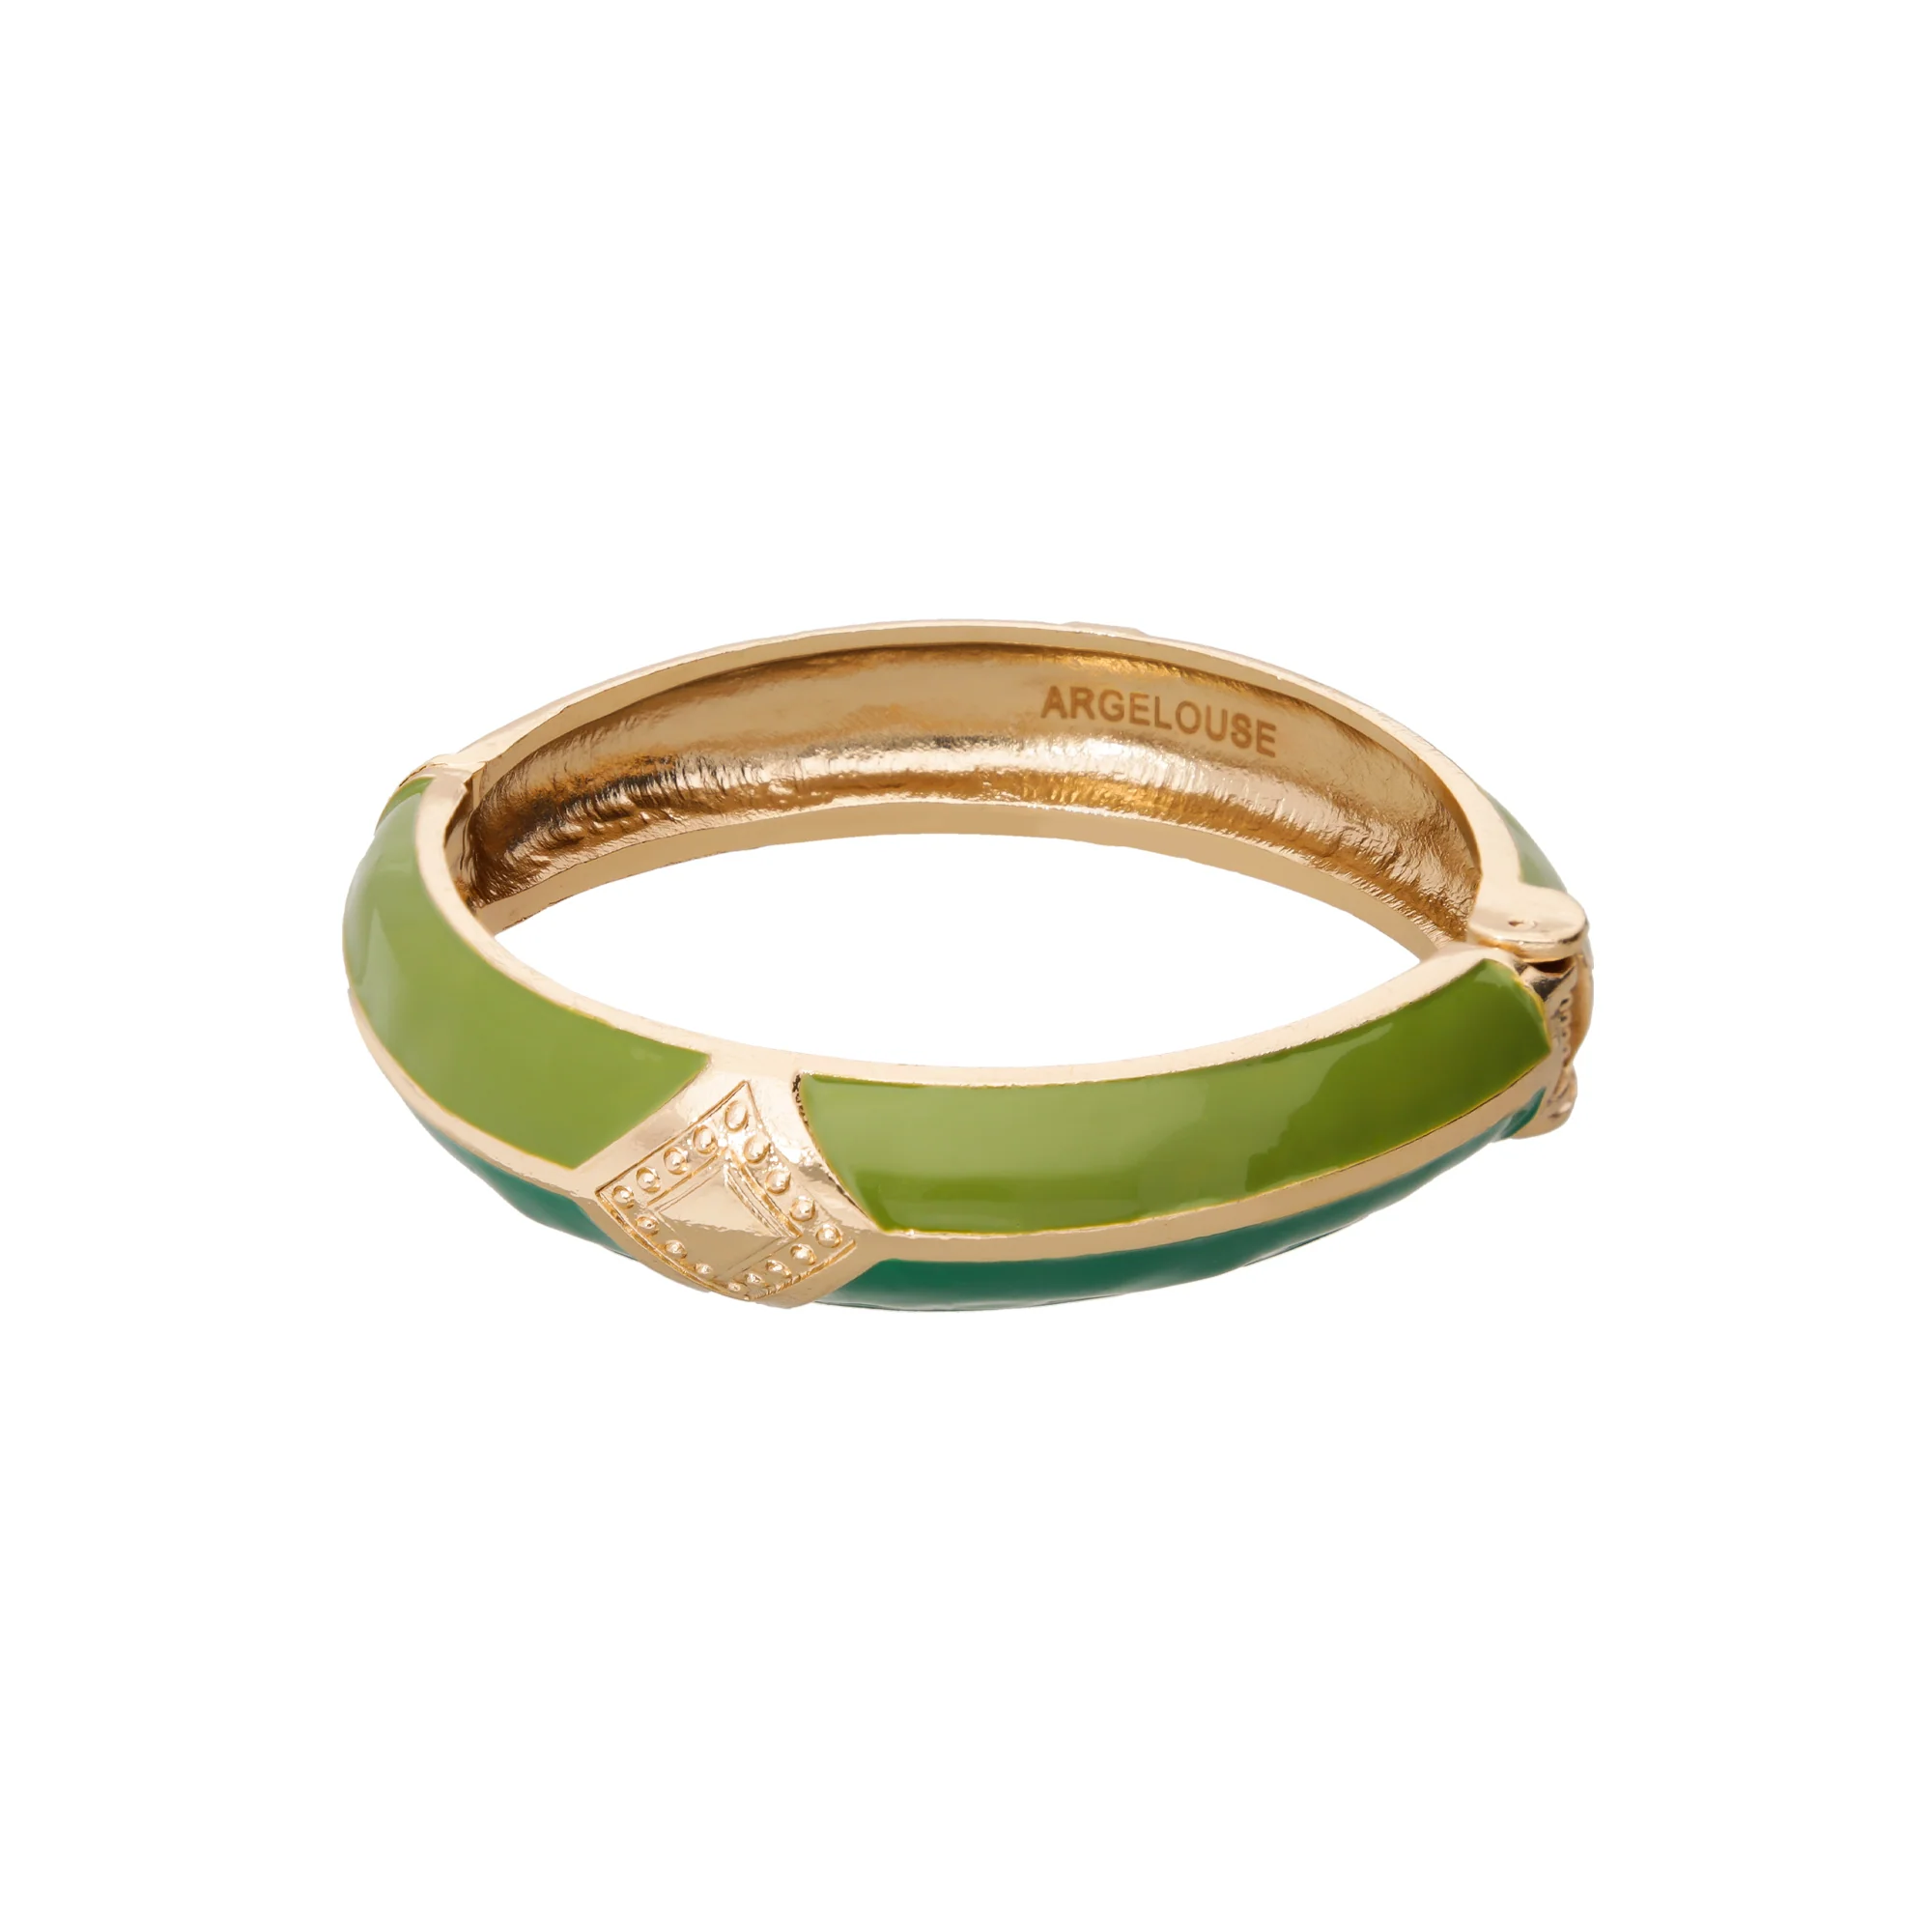 Argelouse bracelets 15